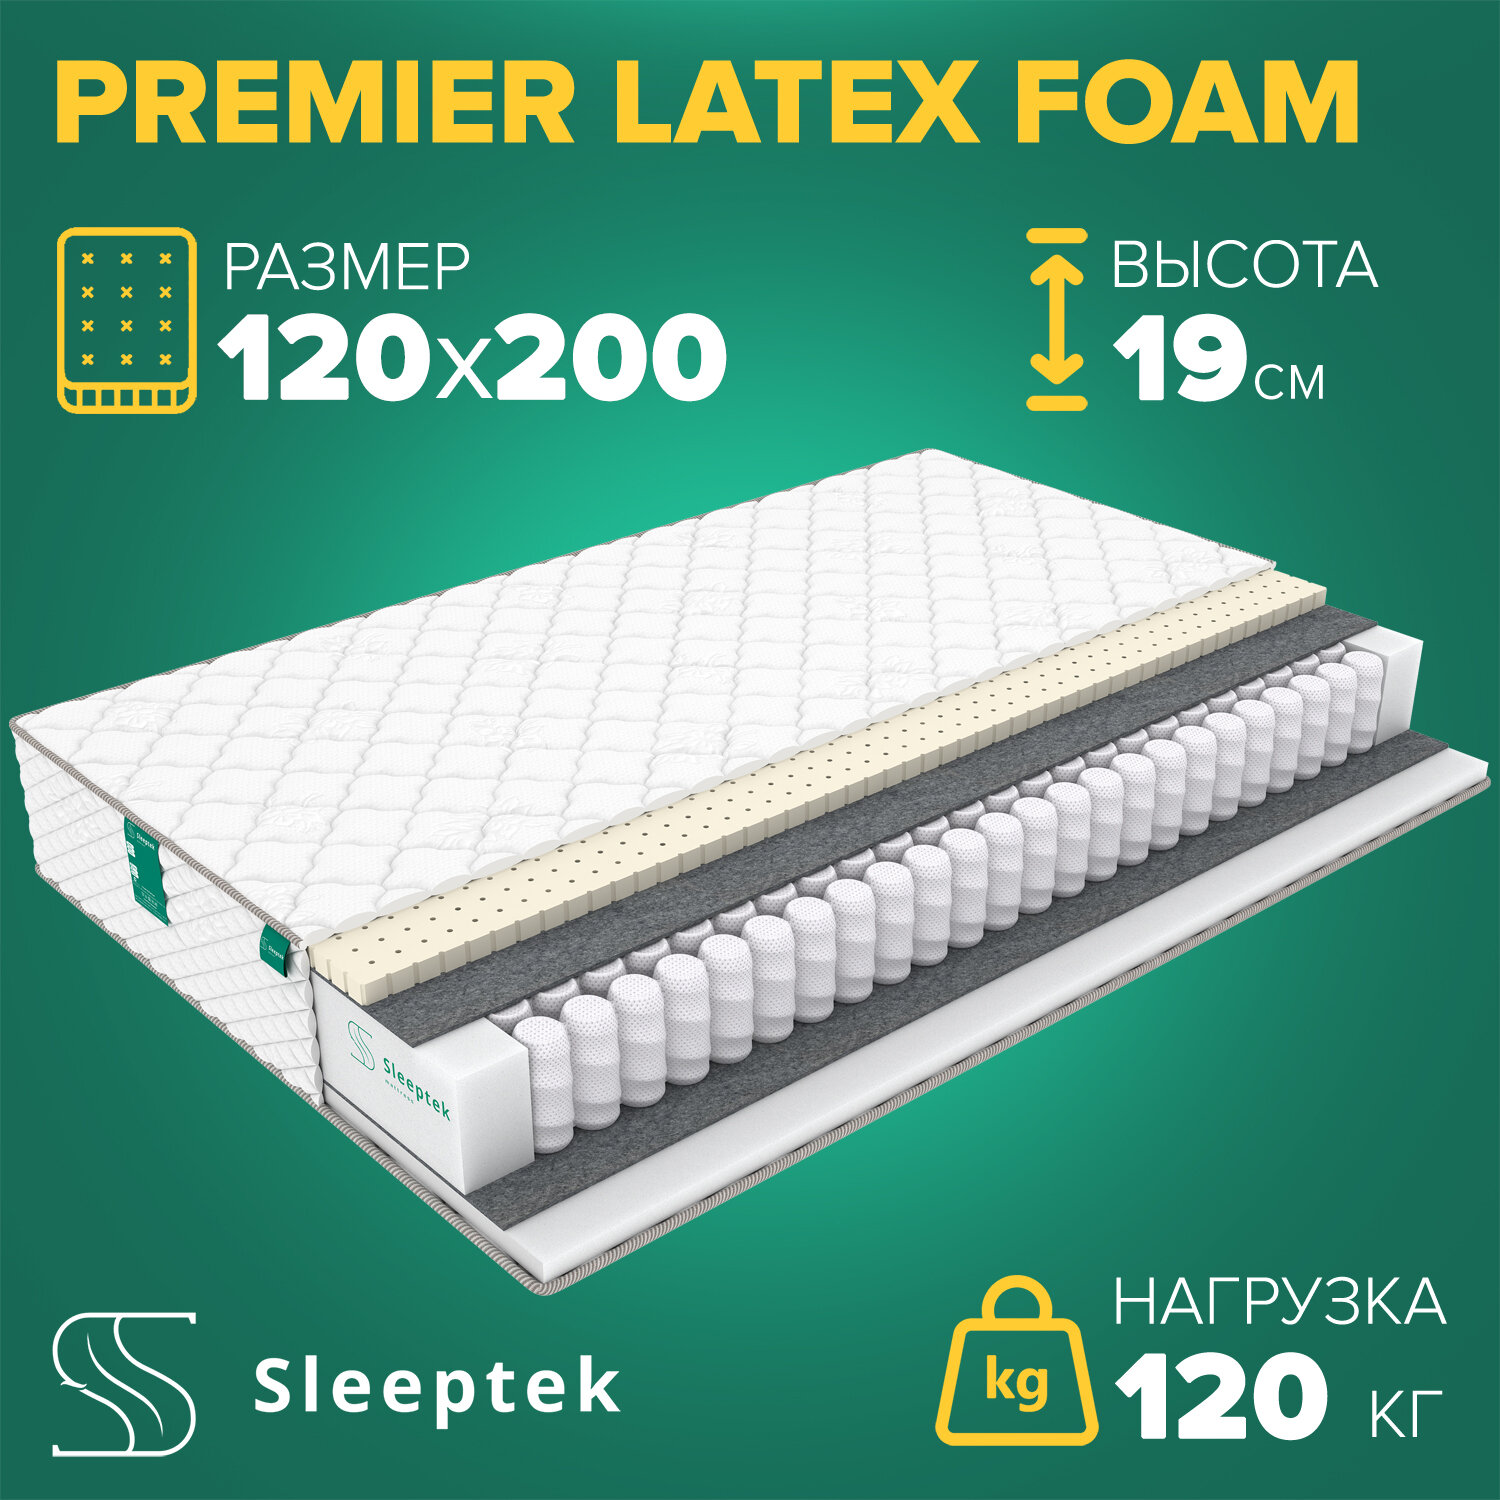  Sleeptek Premier Latex Foam 120200